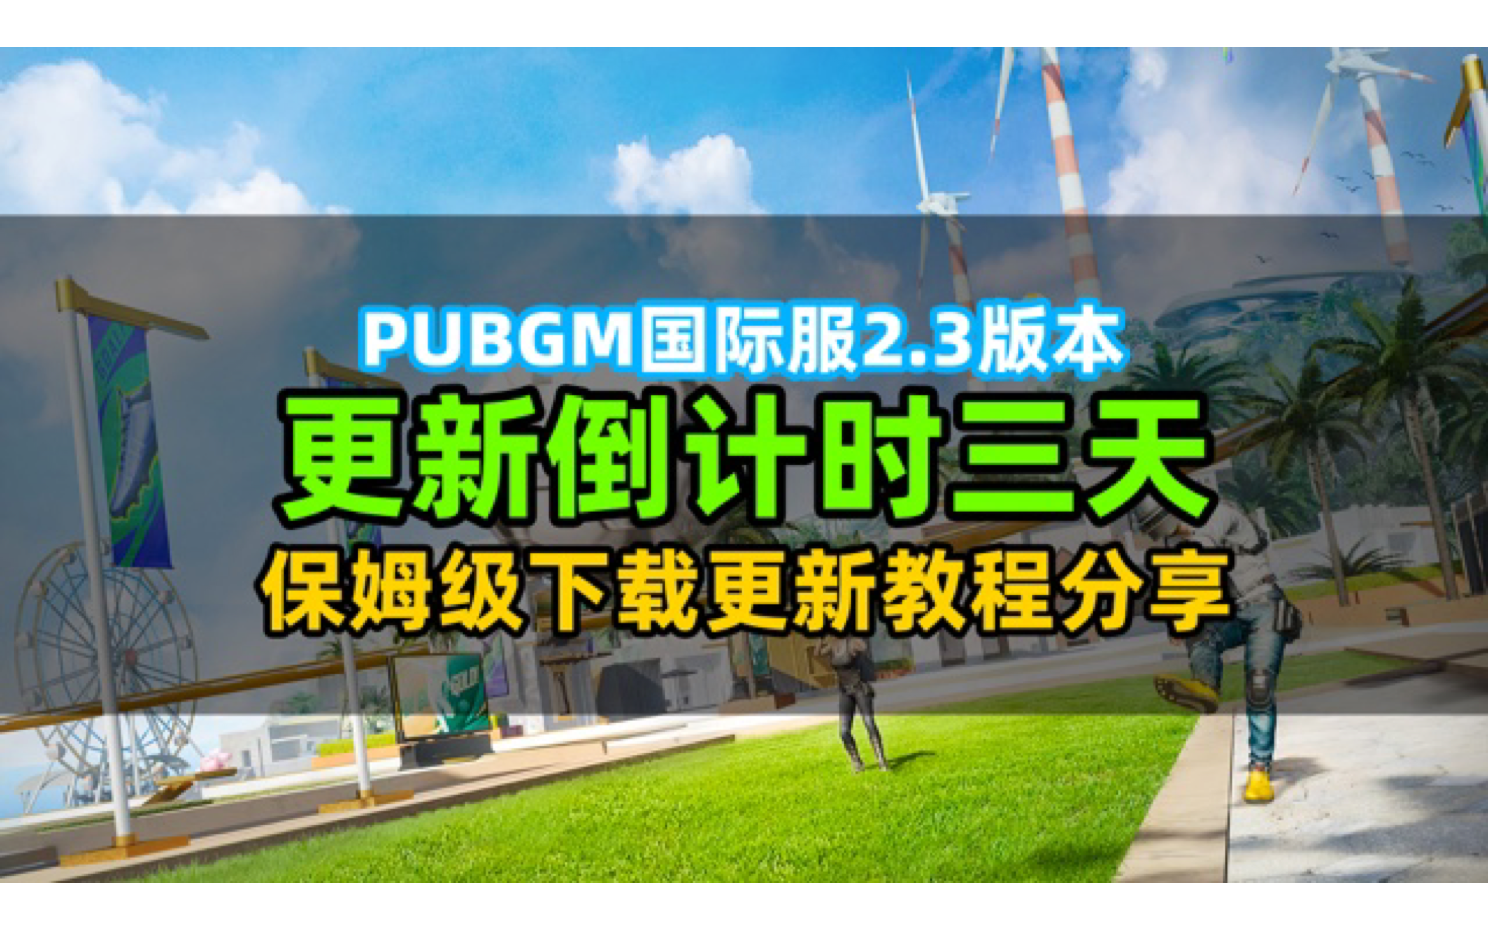 pubgmobile2.3版本前瞻！18号地铁模式恢复！世界杯活动即将开启